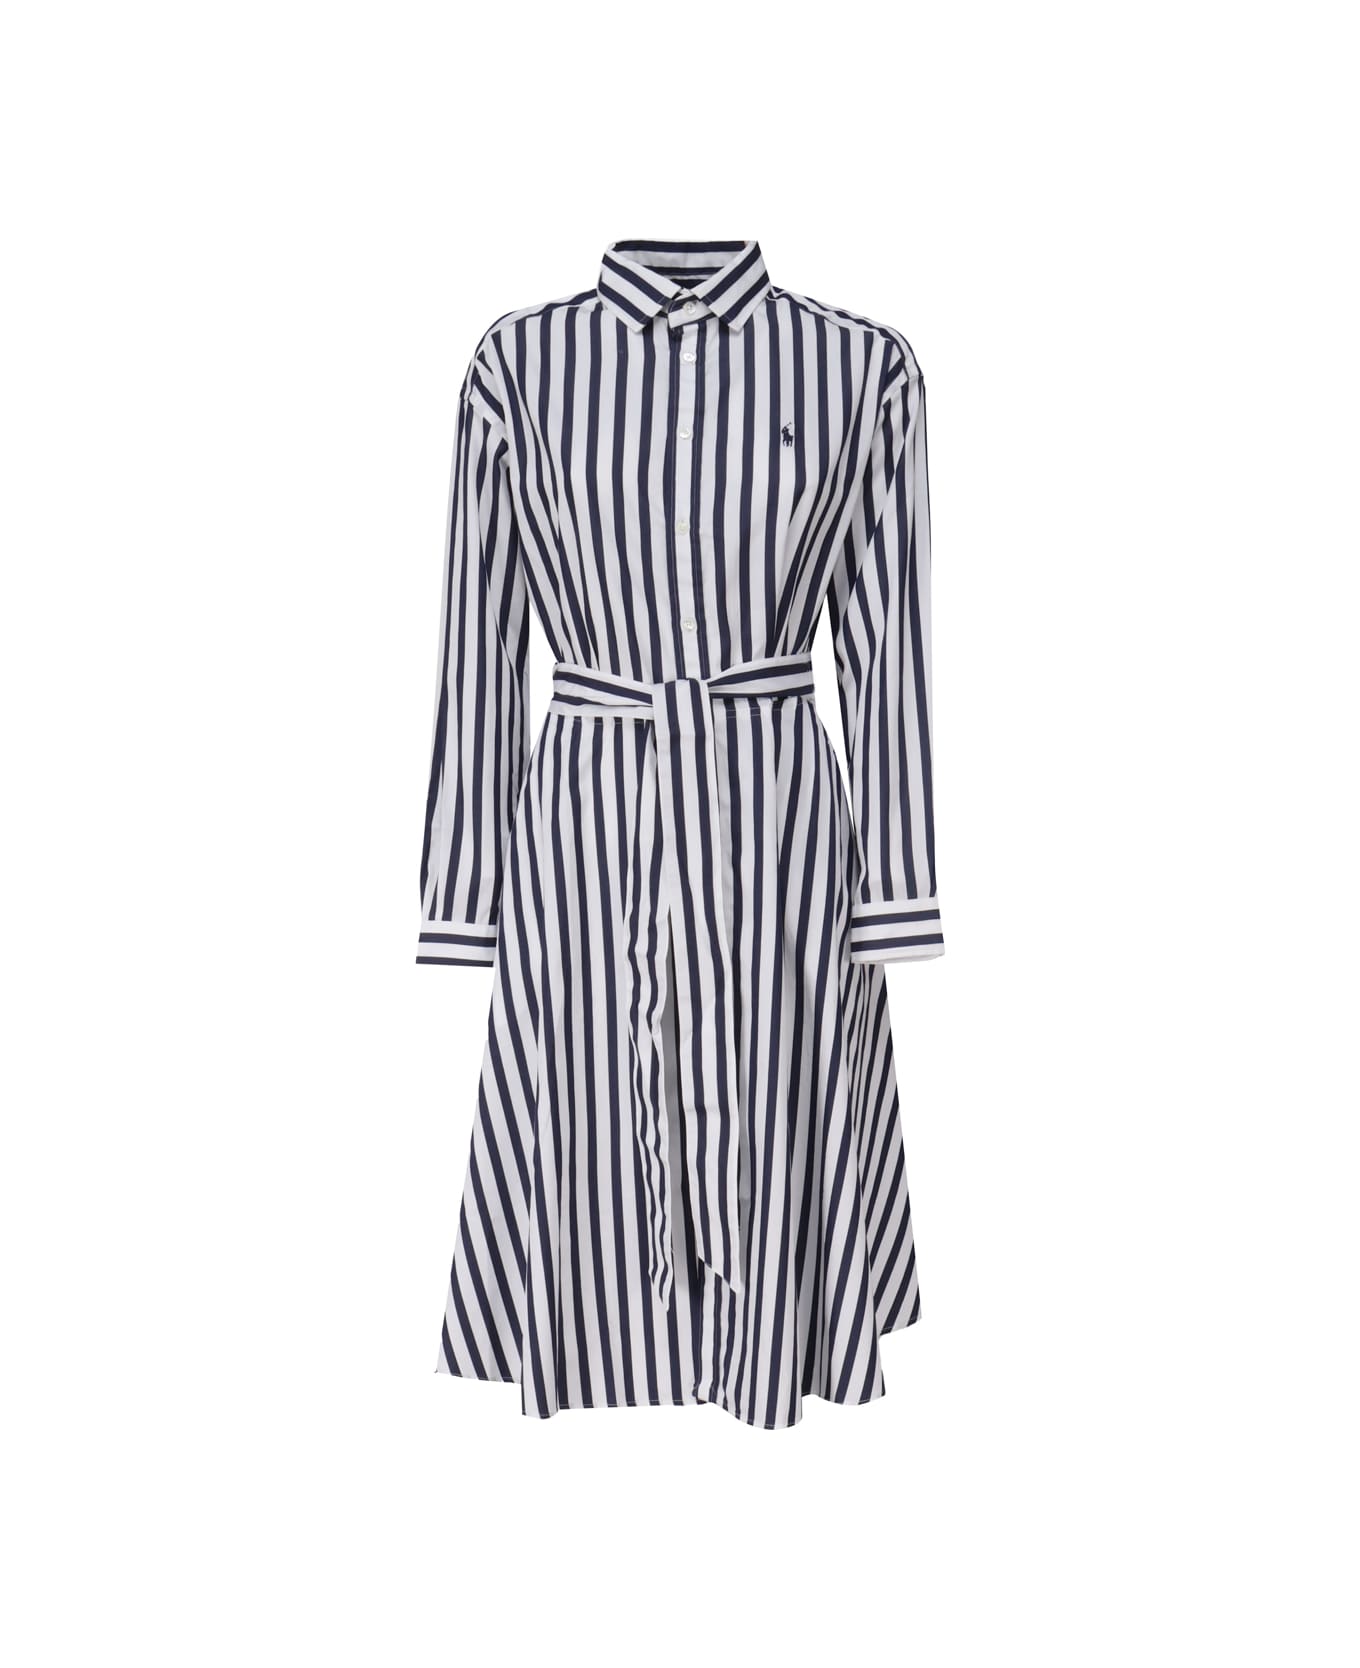 Polo Ralph Lauren Striped Shirtdress - Navy/white